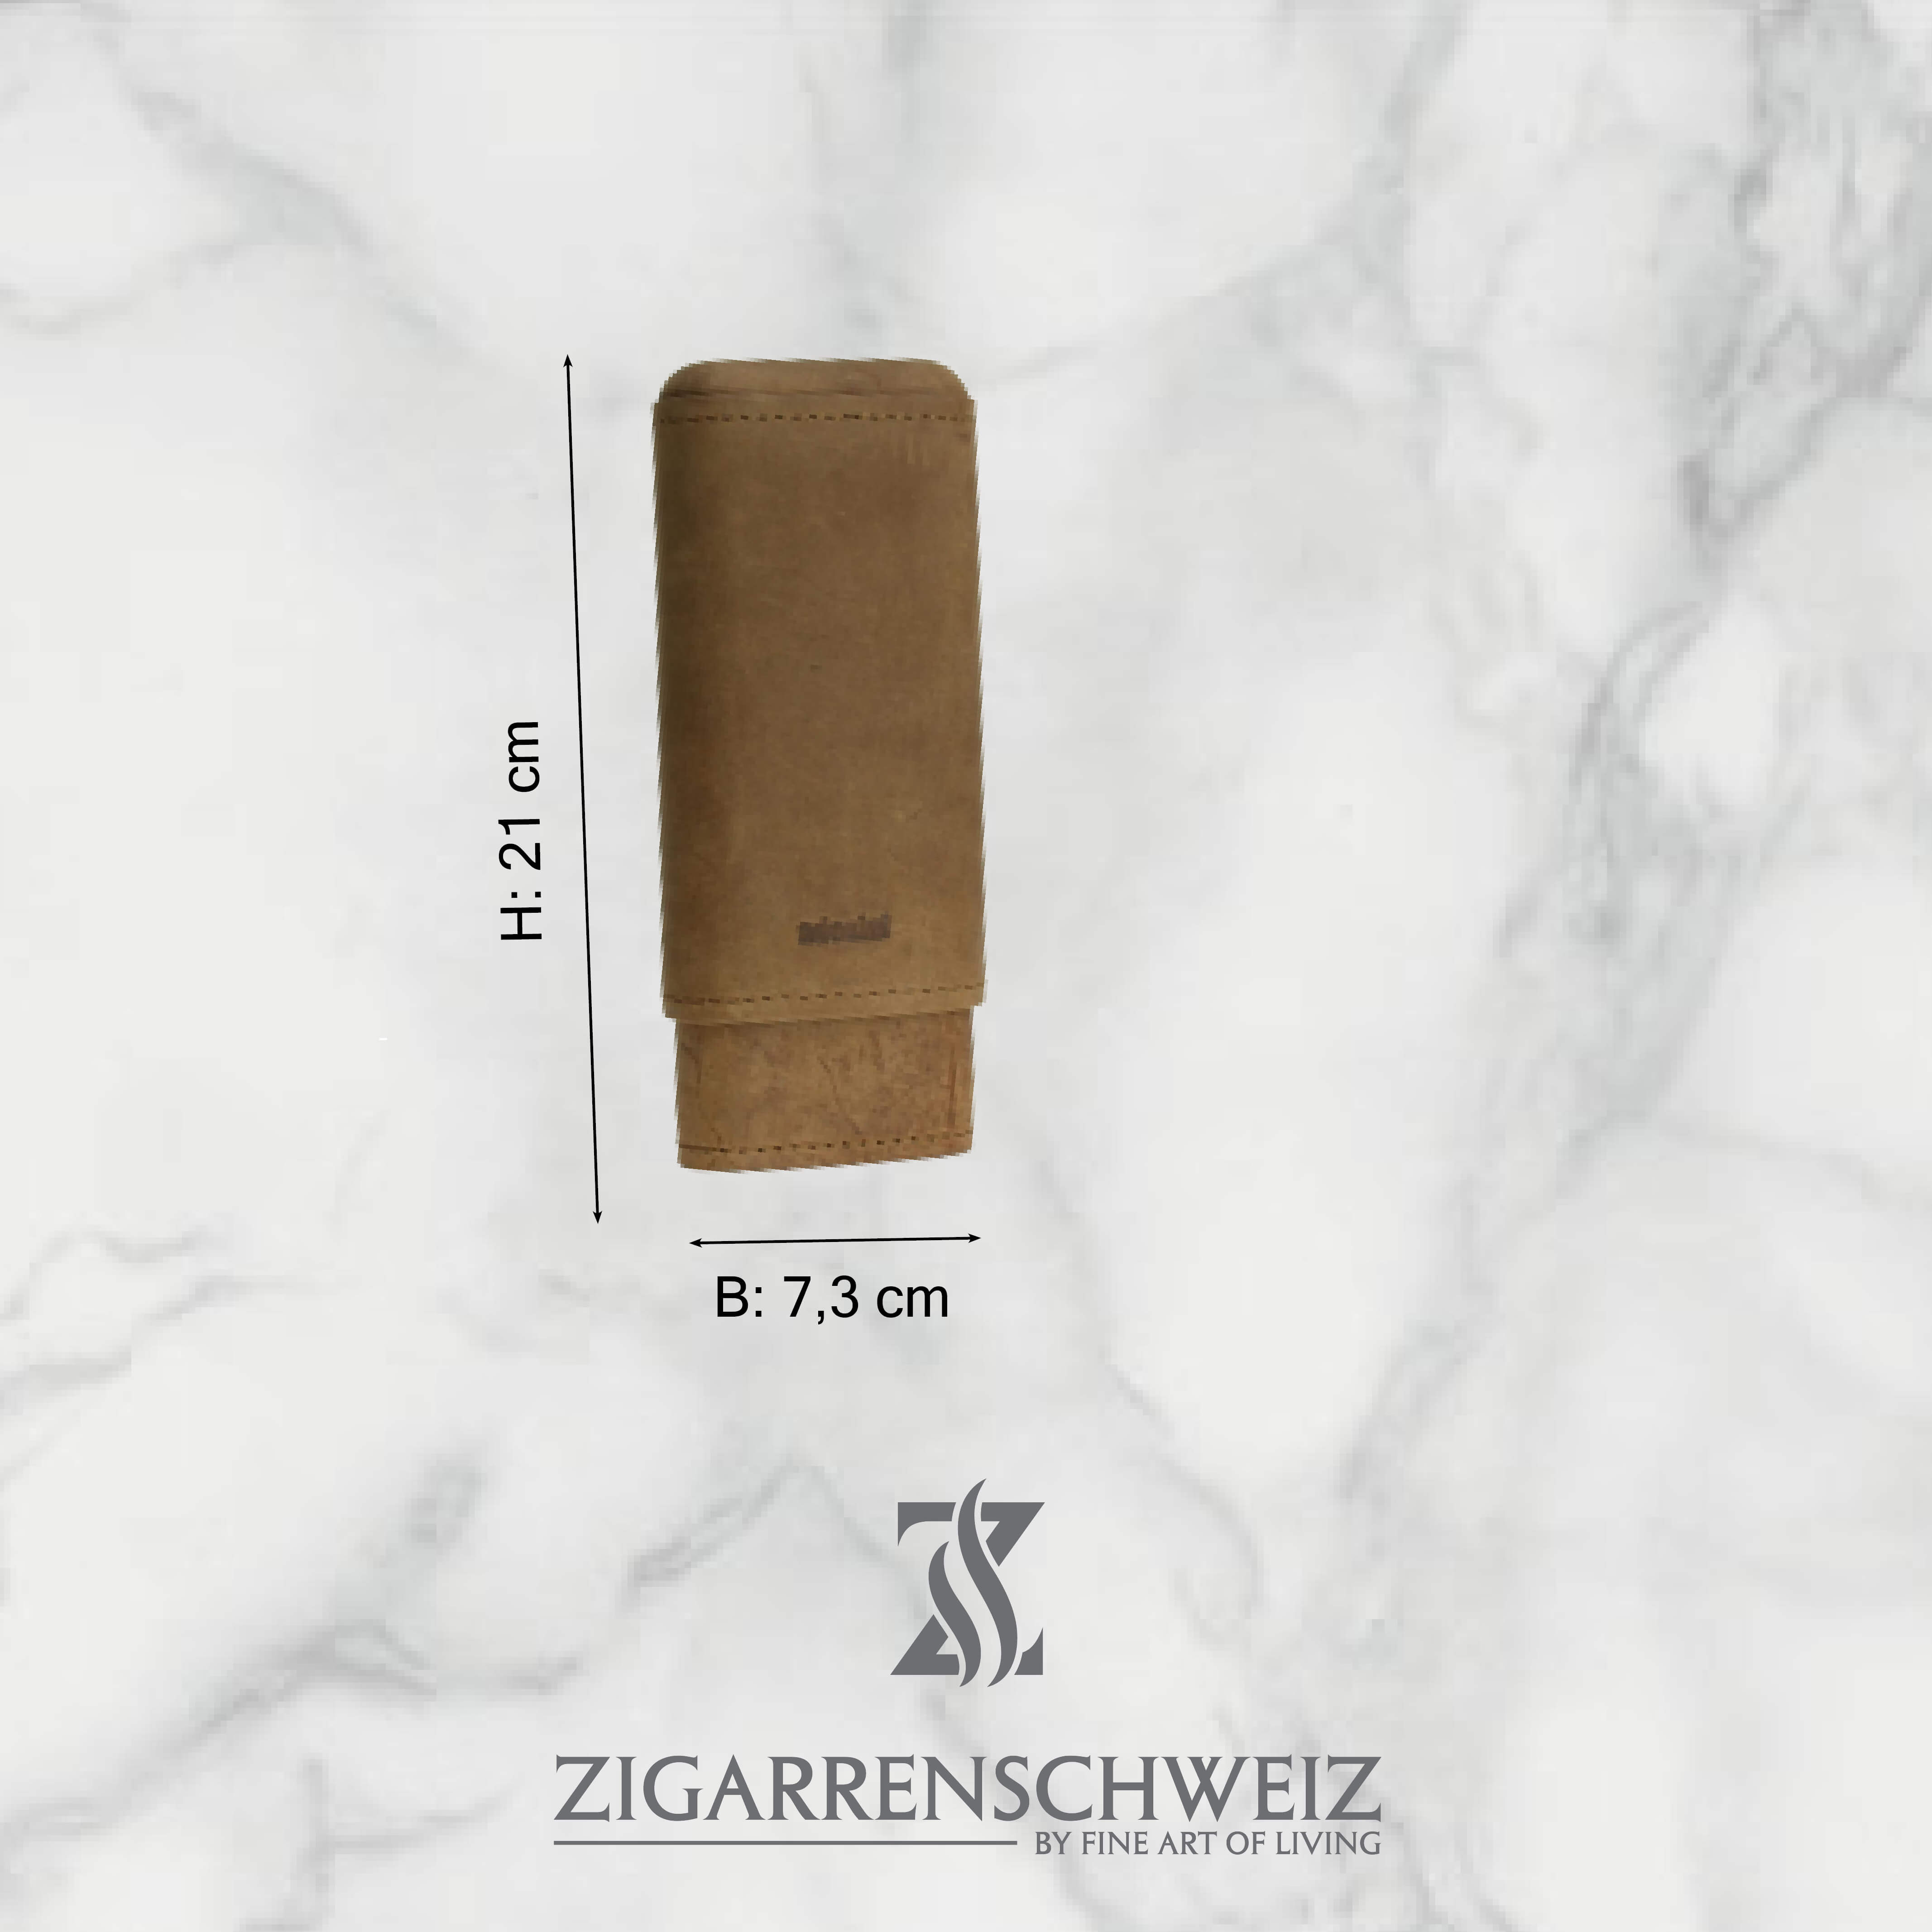 Adorini Zigarrenetui, Material: Echtleder, Kapazität: 2-3 Zigarren, Farbe: Braun, mit Abmessungen